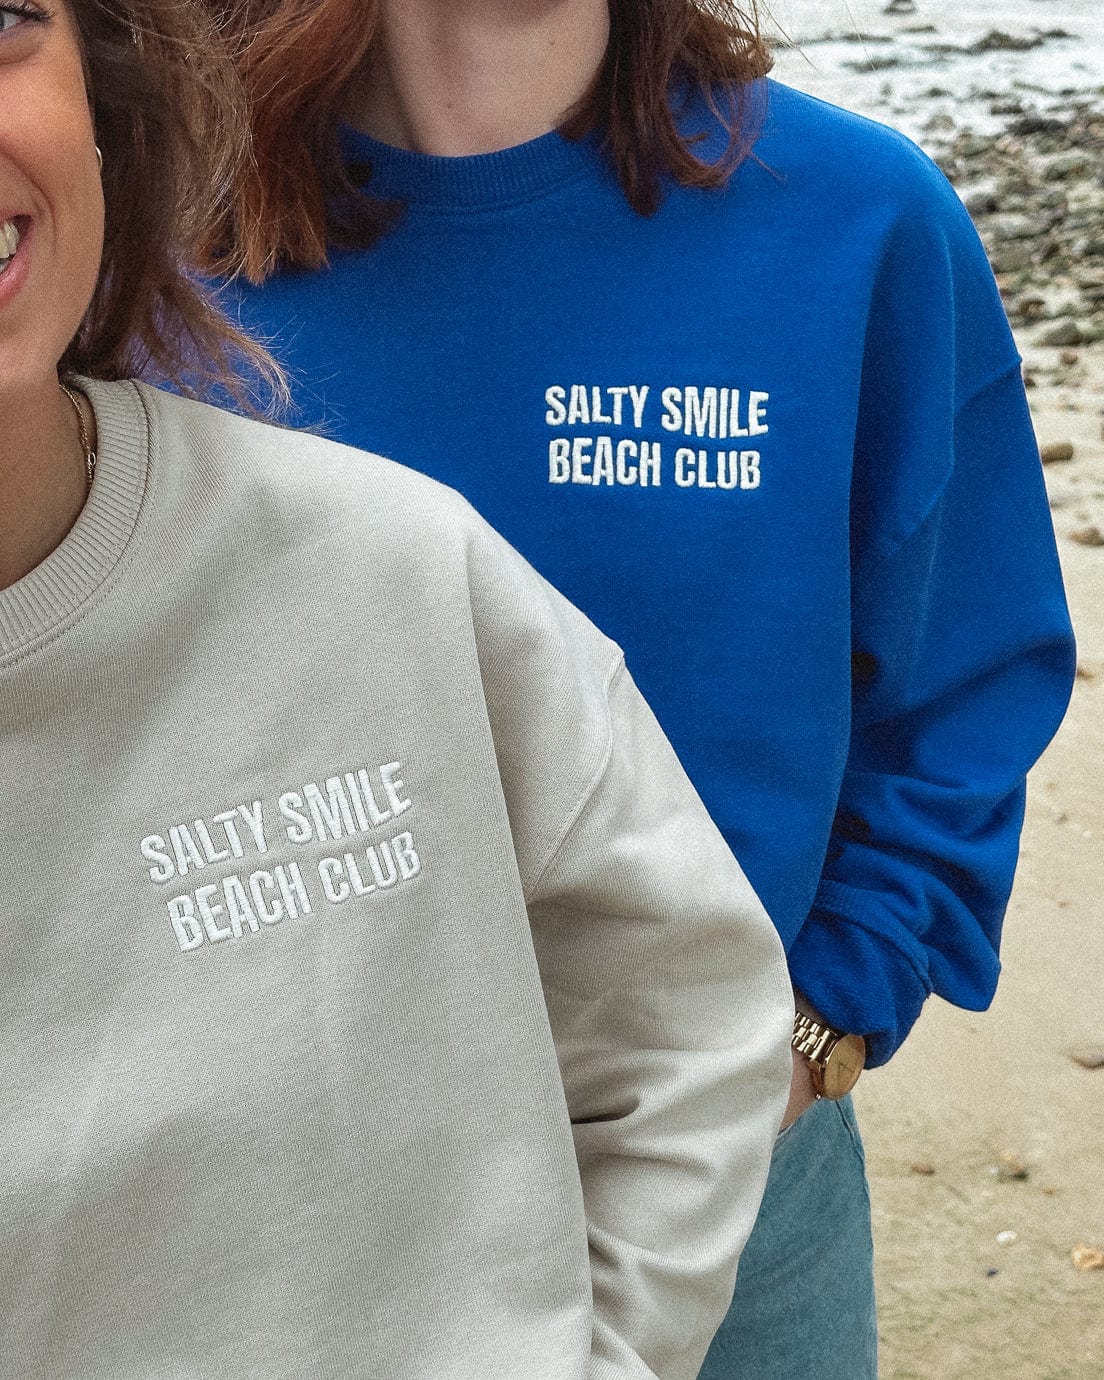 vetements surf salty smile BEACH CLUB BEIGE SWEATSHIRT marque eco responsable coton bio